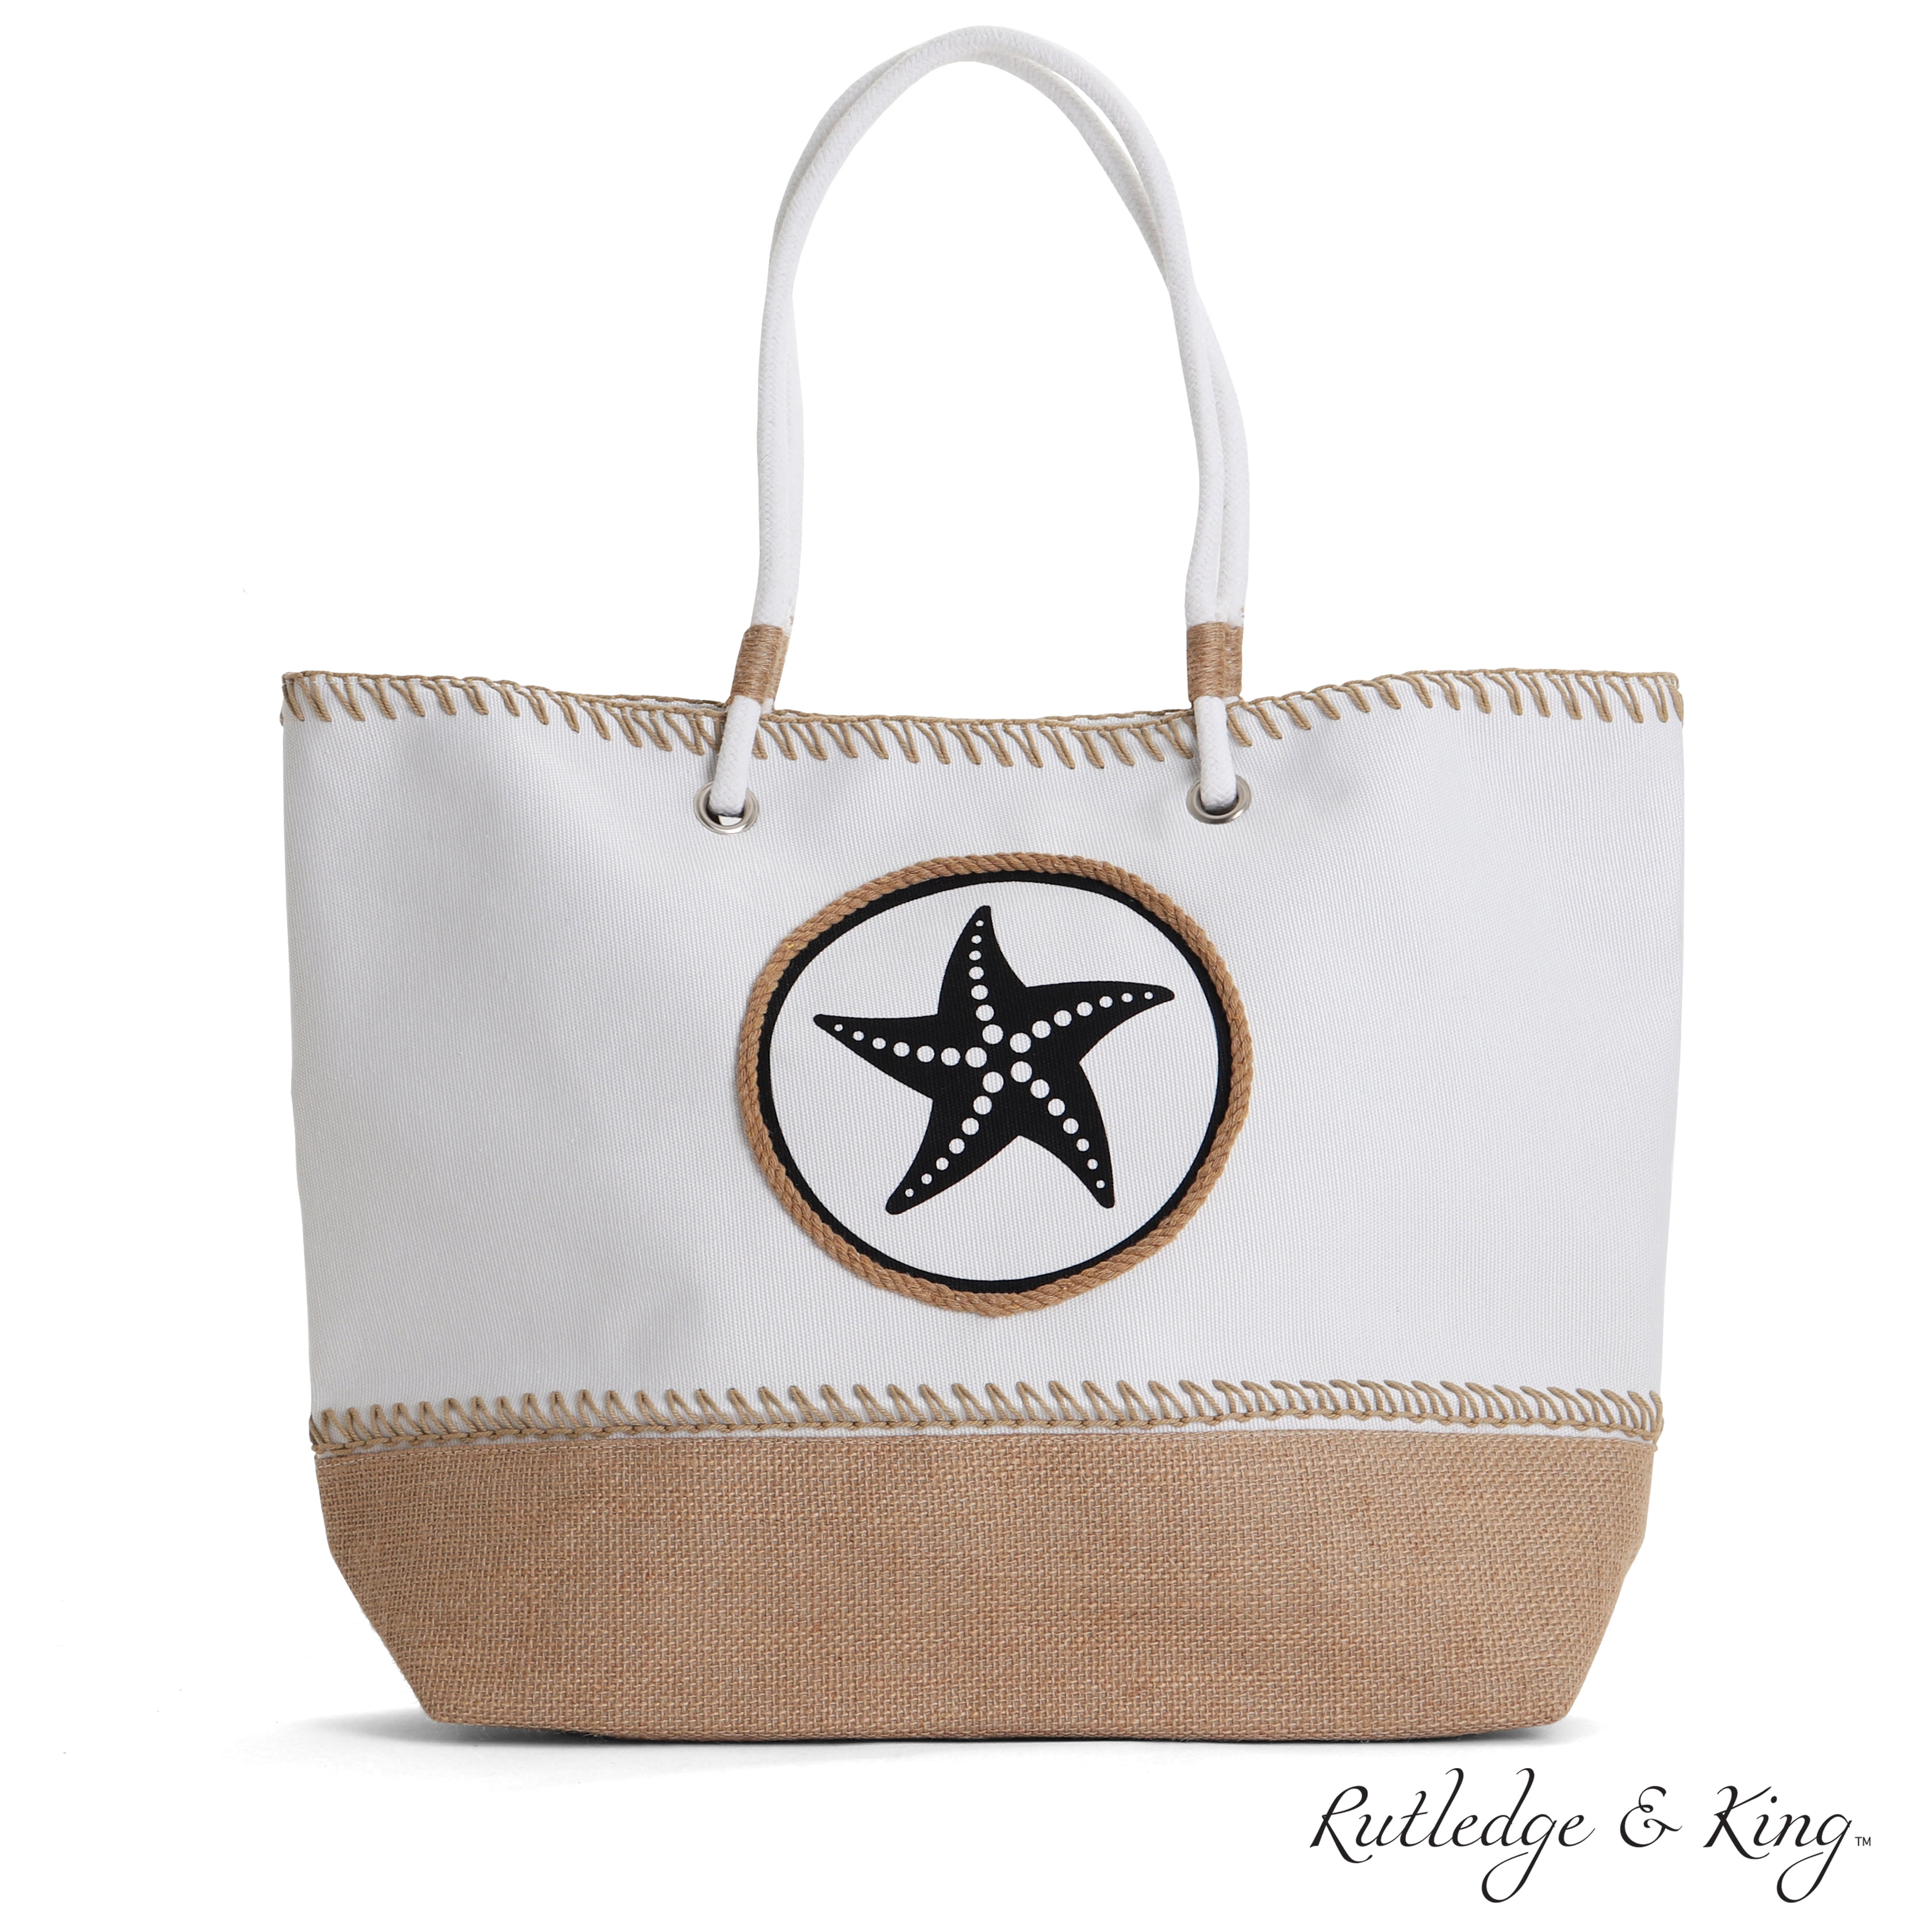 Rutledge & King Starfish Beach Bag - Large Tote Bag with Rope Handles 